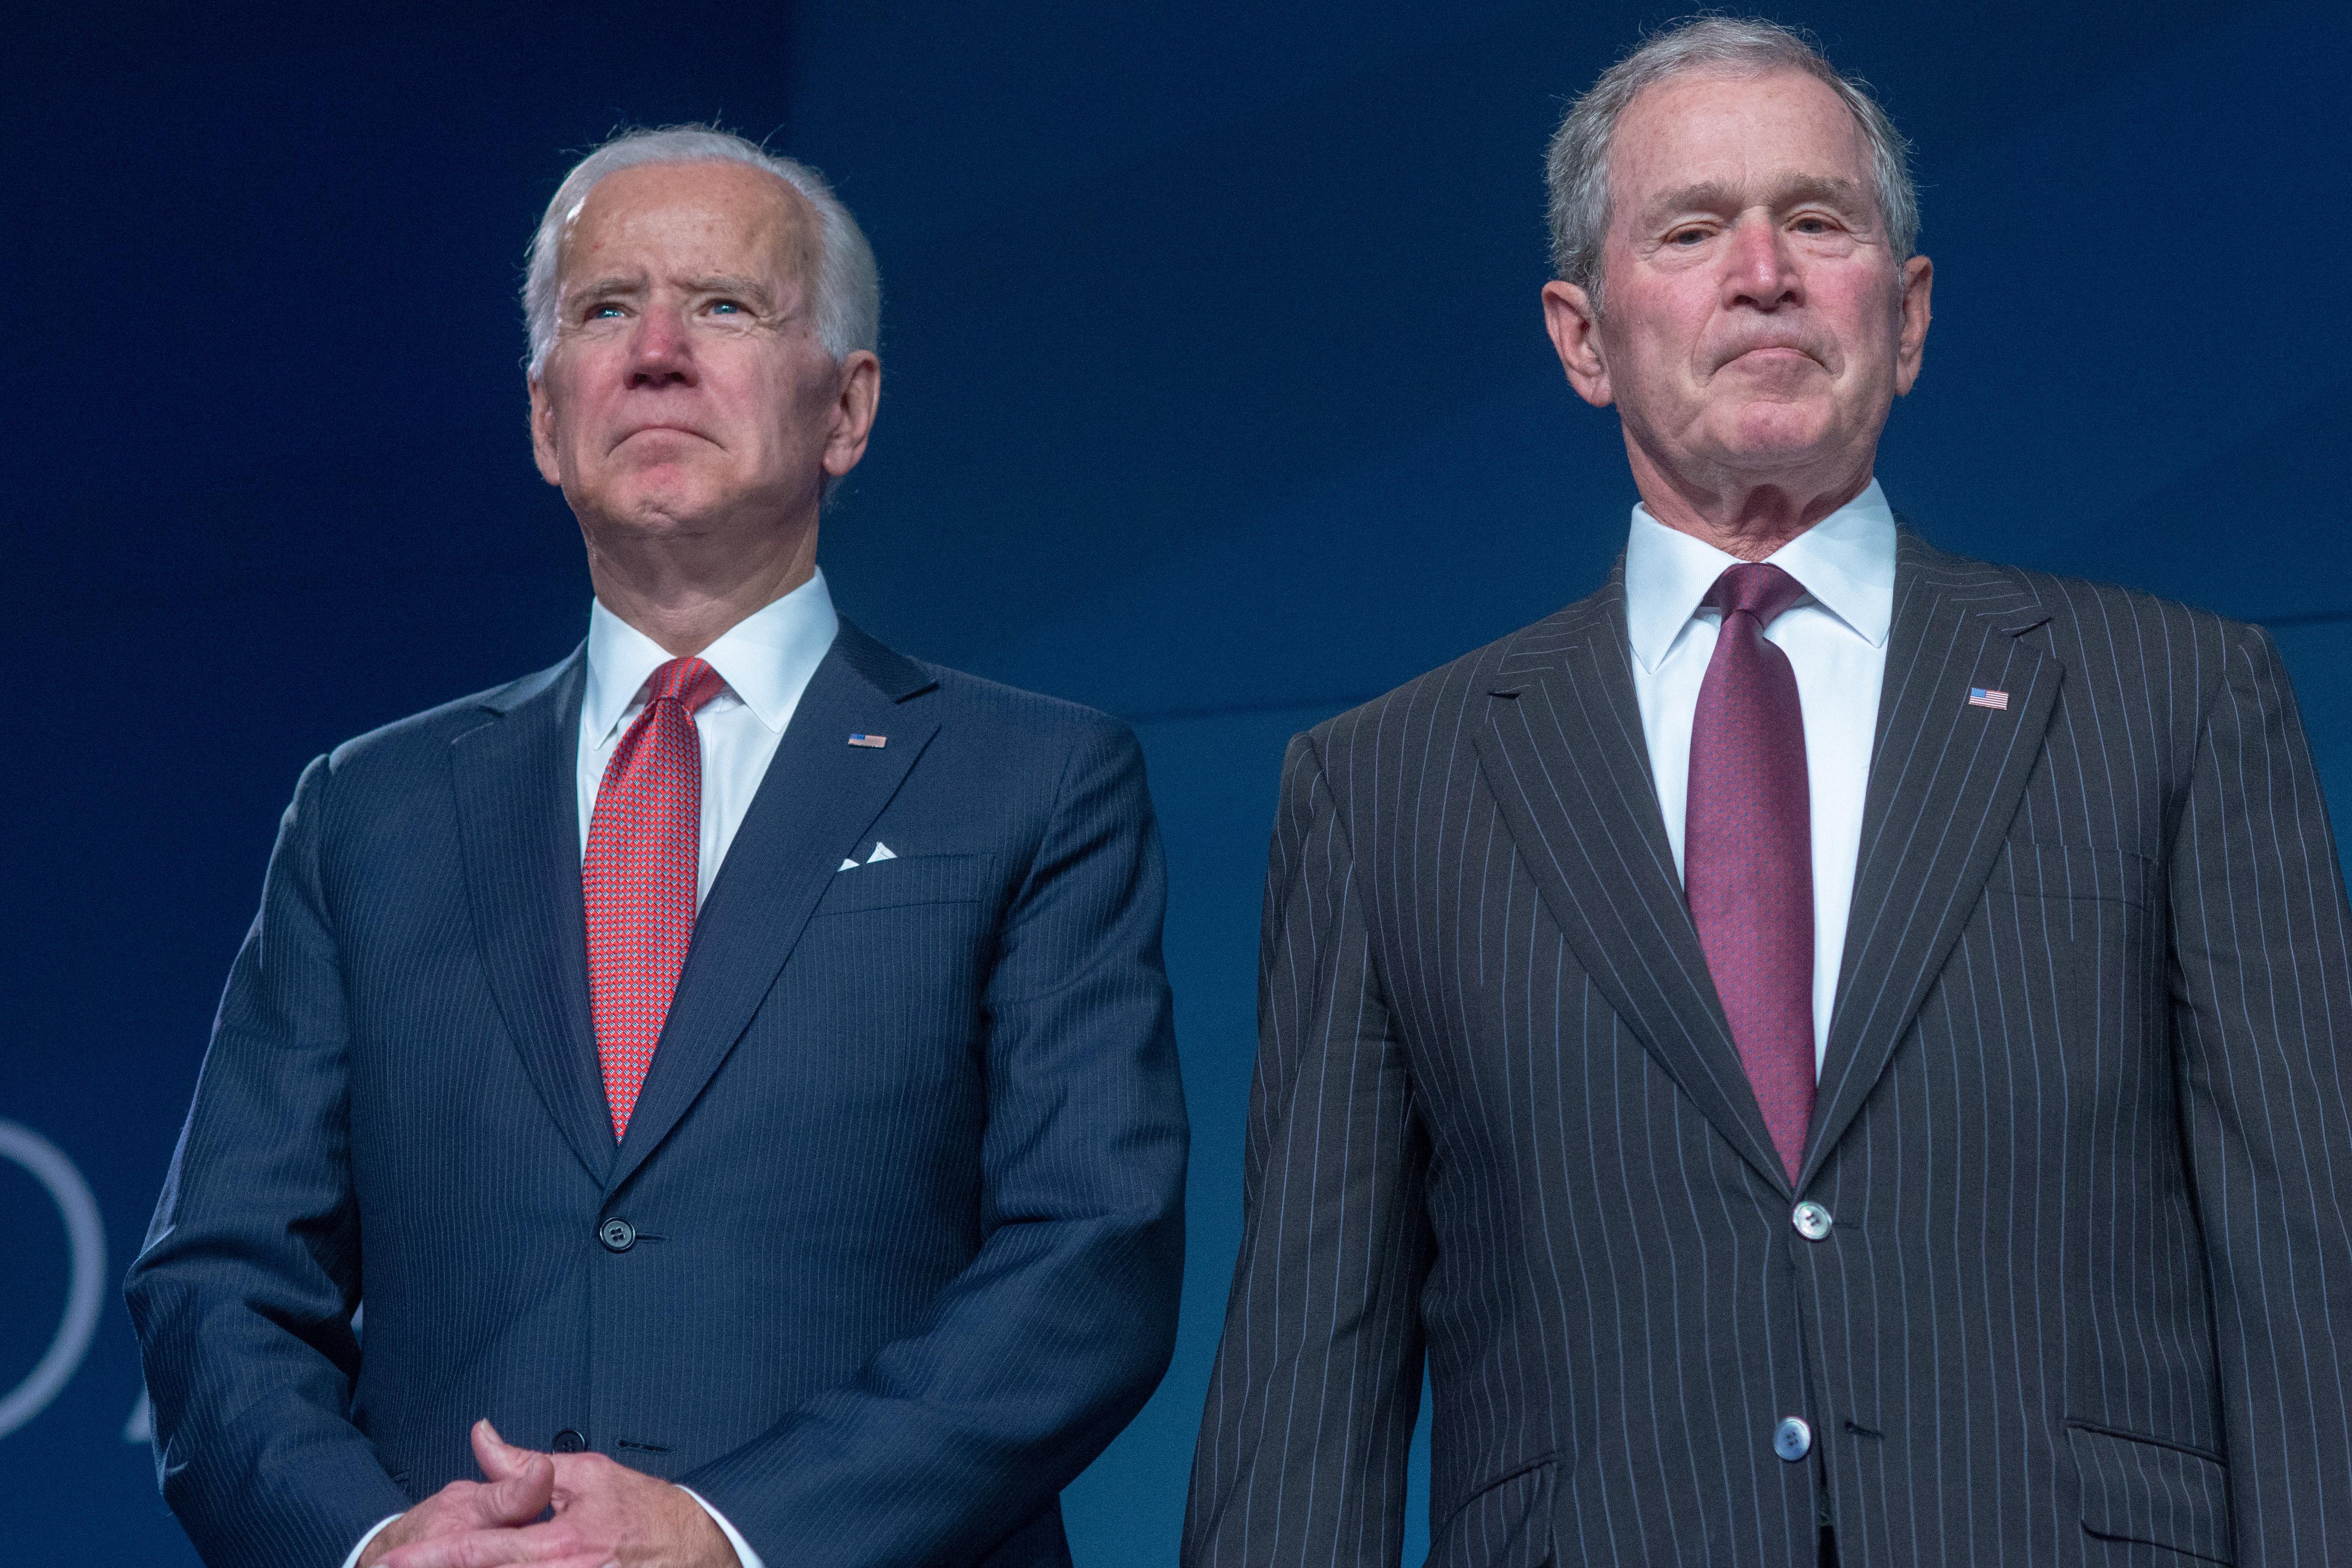 Former Vice President Joe Biden presents George W. Bush and Laura Bush the 2018 Liberty Medal at The National Constitution Center on November 11, 2018 in Philadelphia, Pennsylvania.